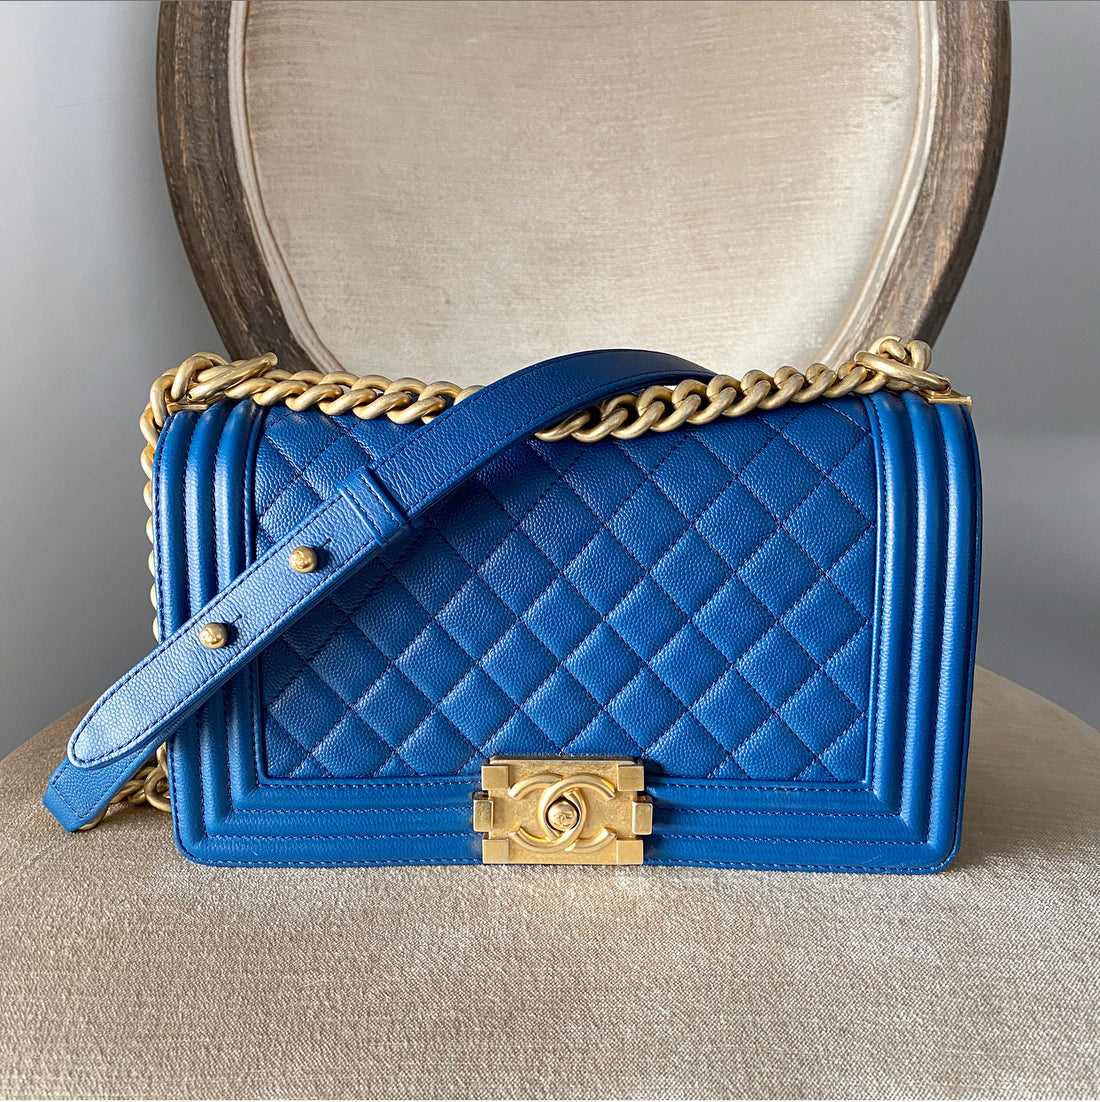 Chanel Blue Caviar Medium Boy Bag with Gold Hardware – I MISS YOU